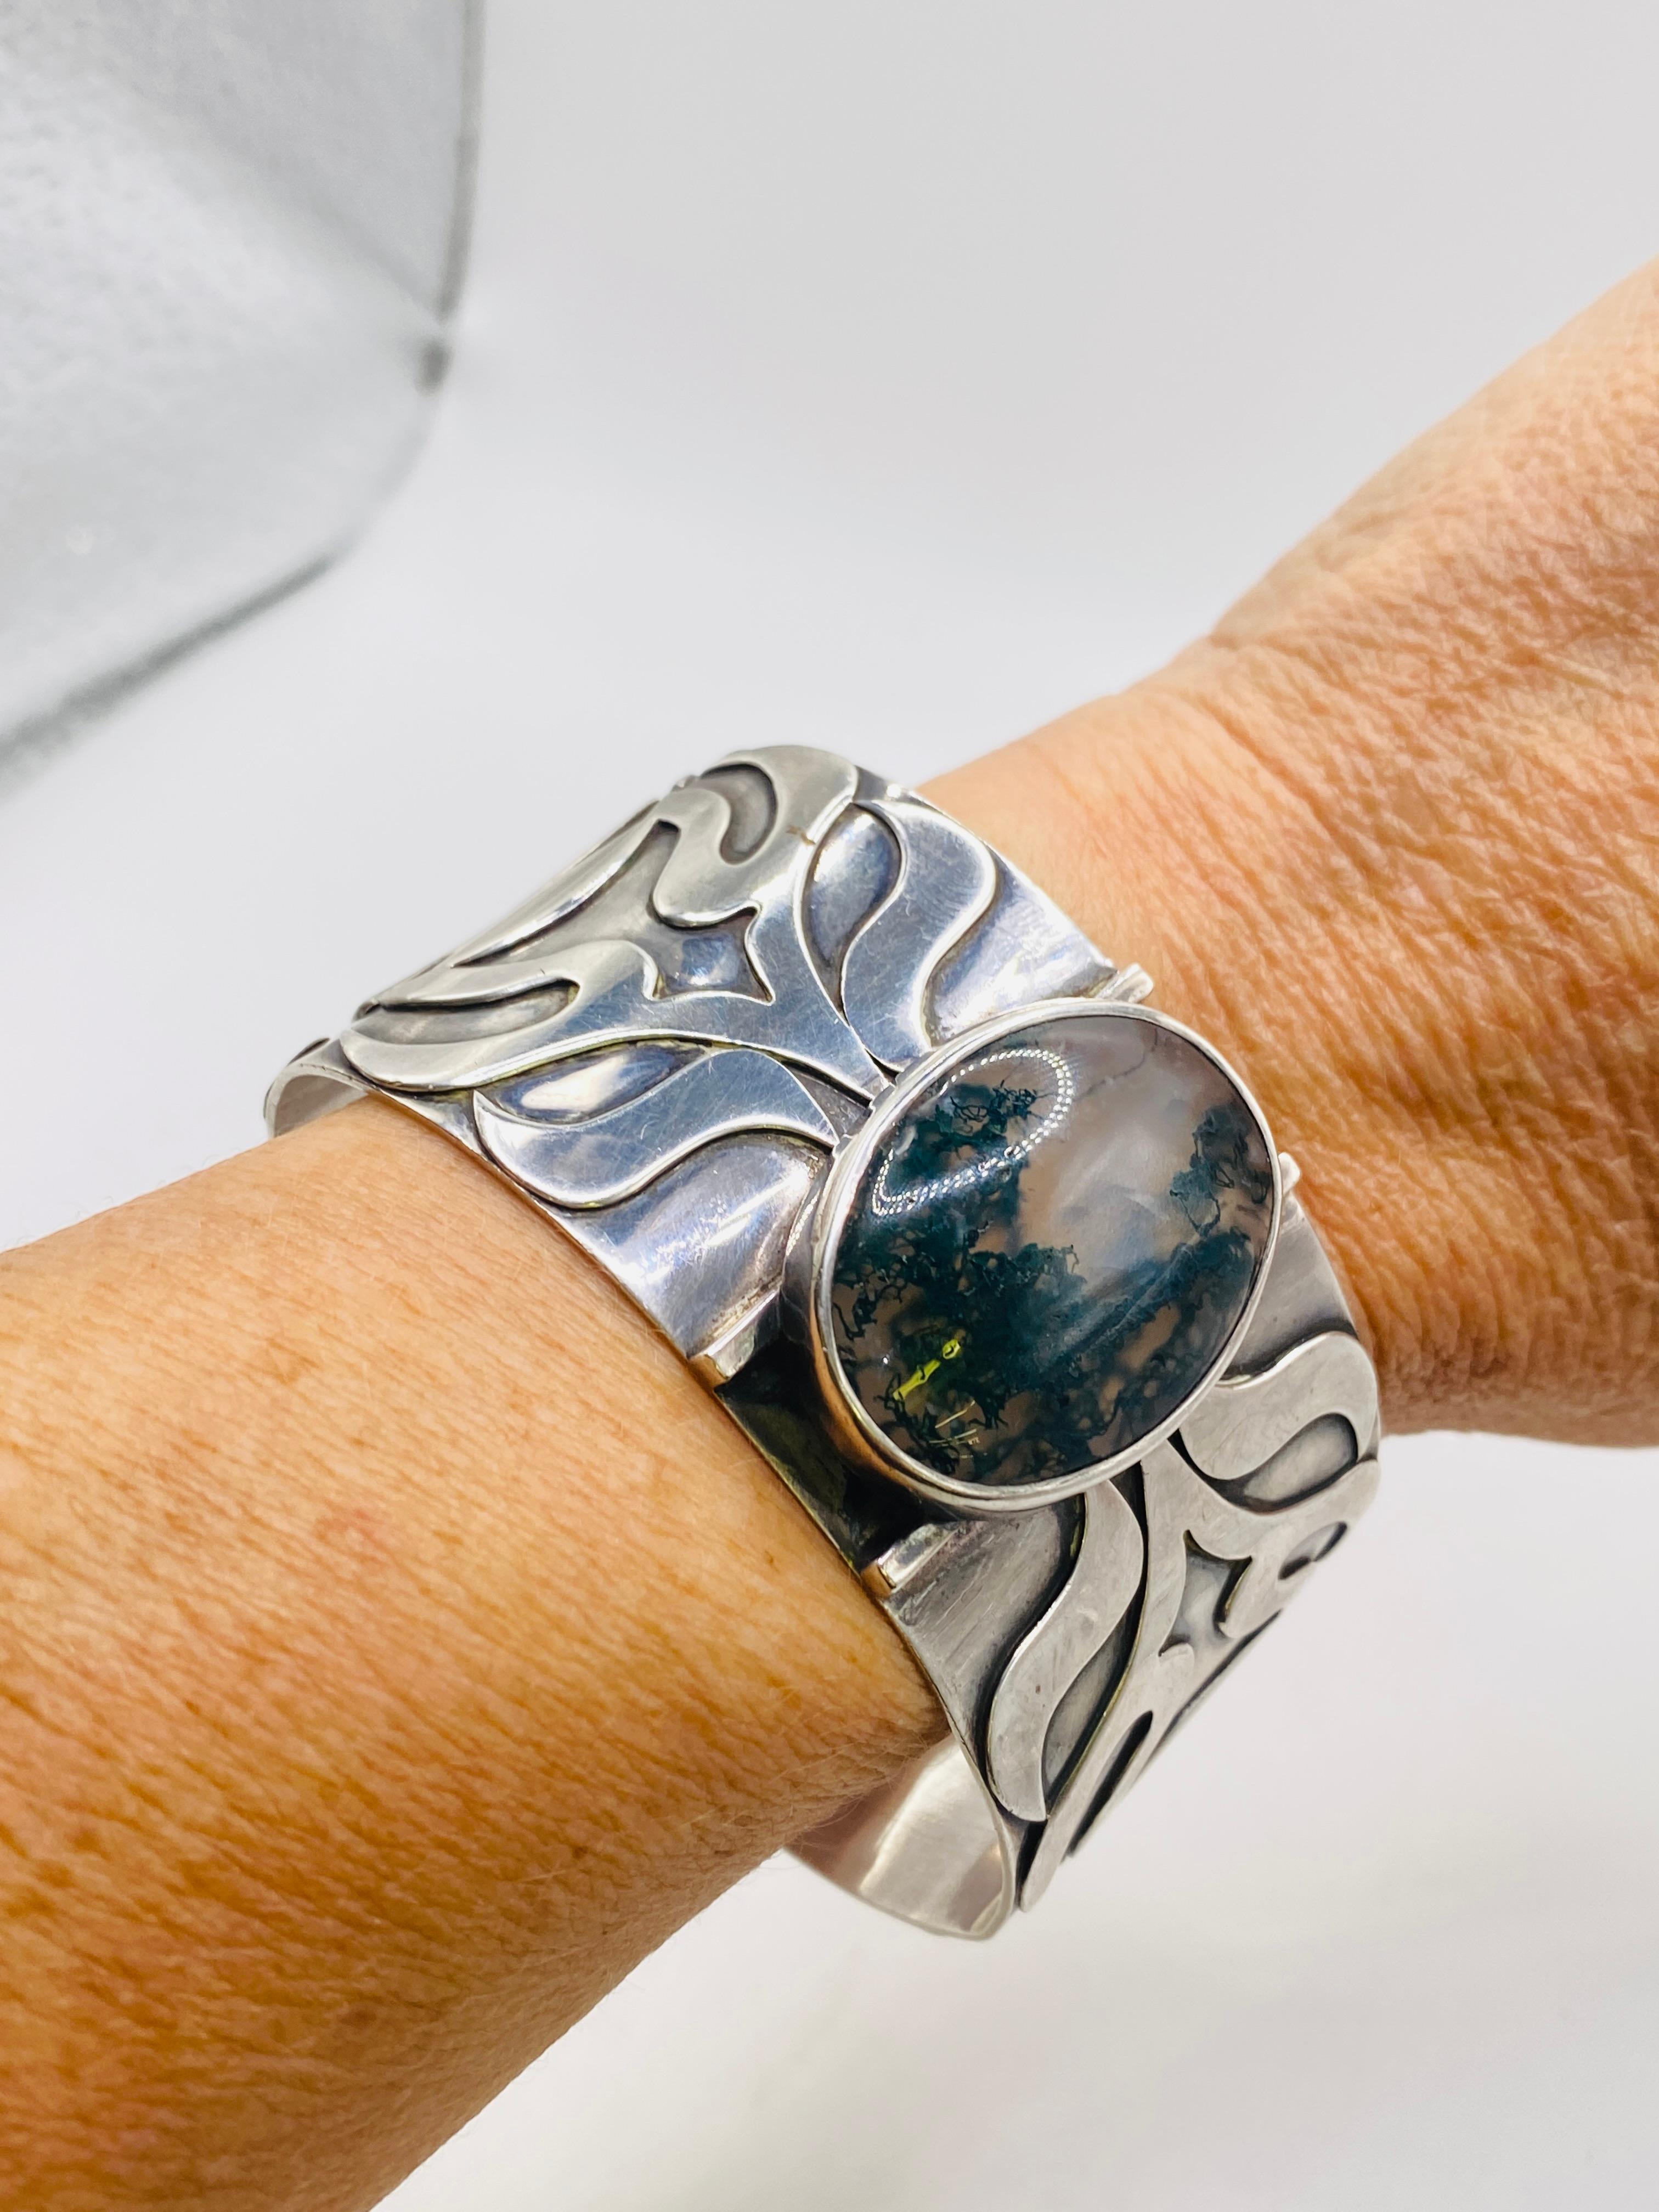 Moss agate sterling silver cuff bracelet. Signed Sari. 42.3Dwt